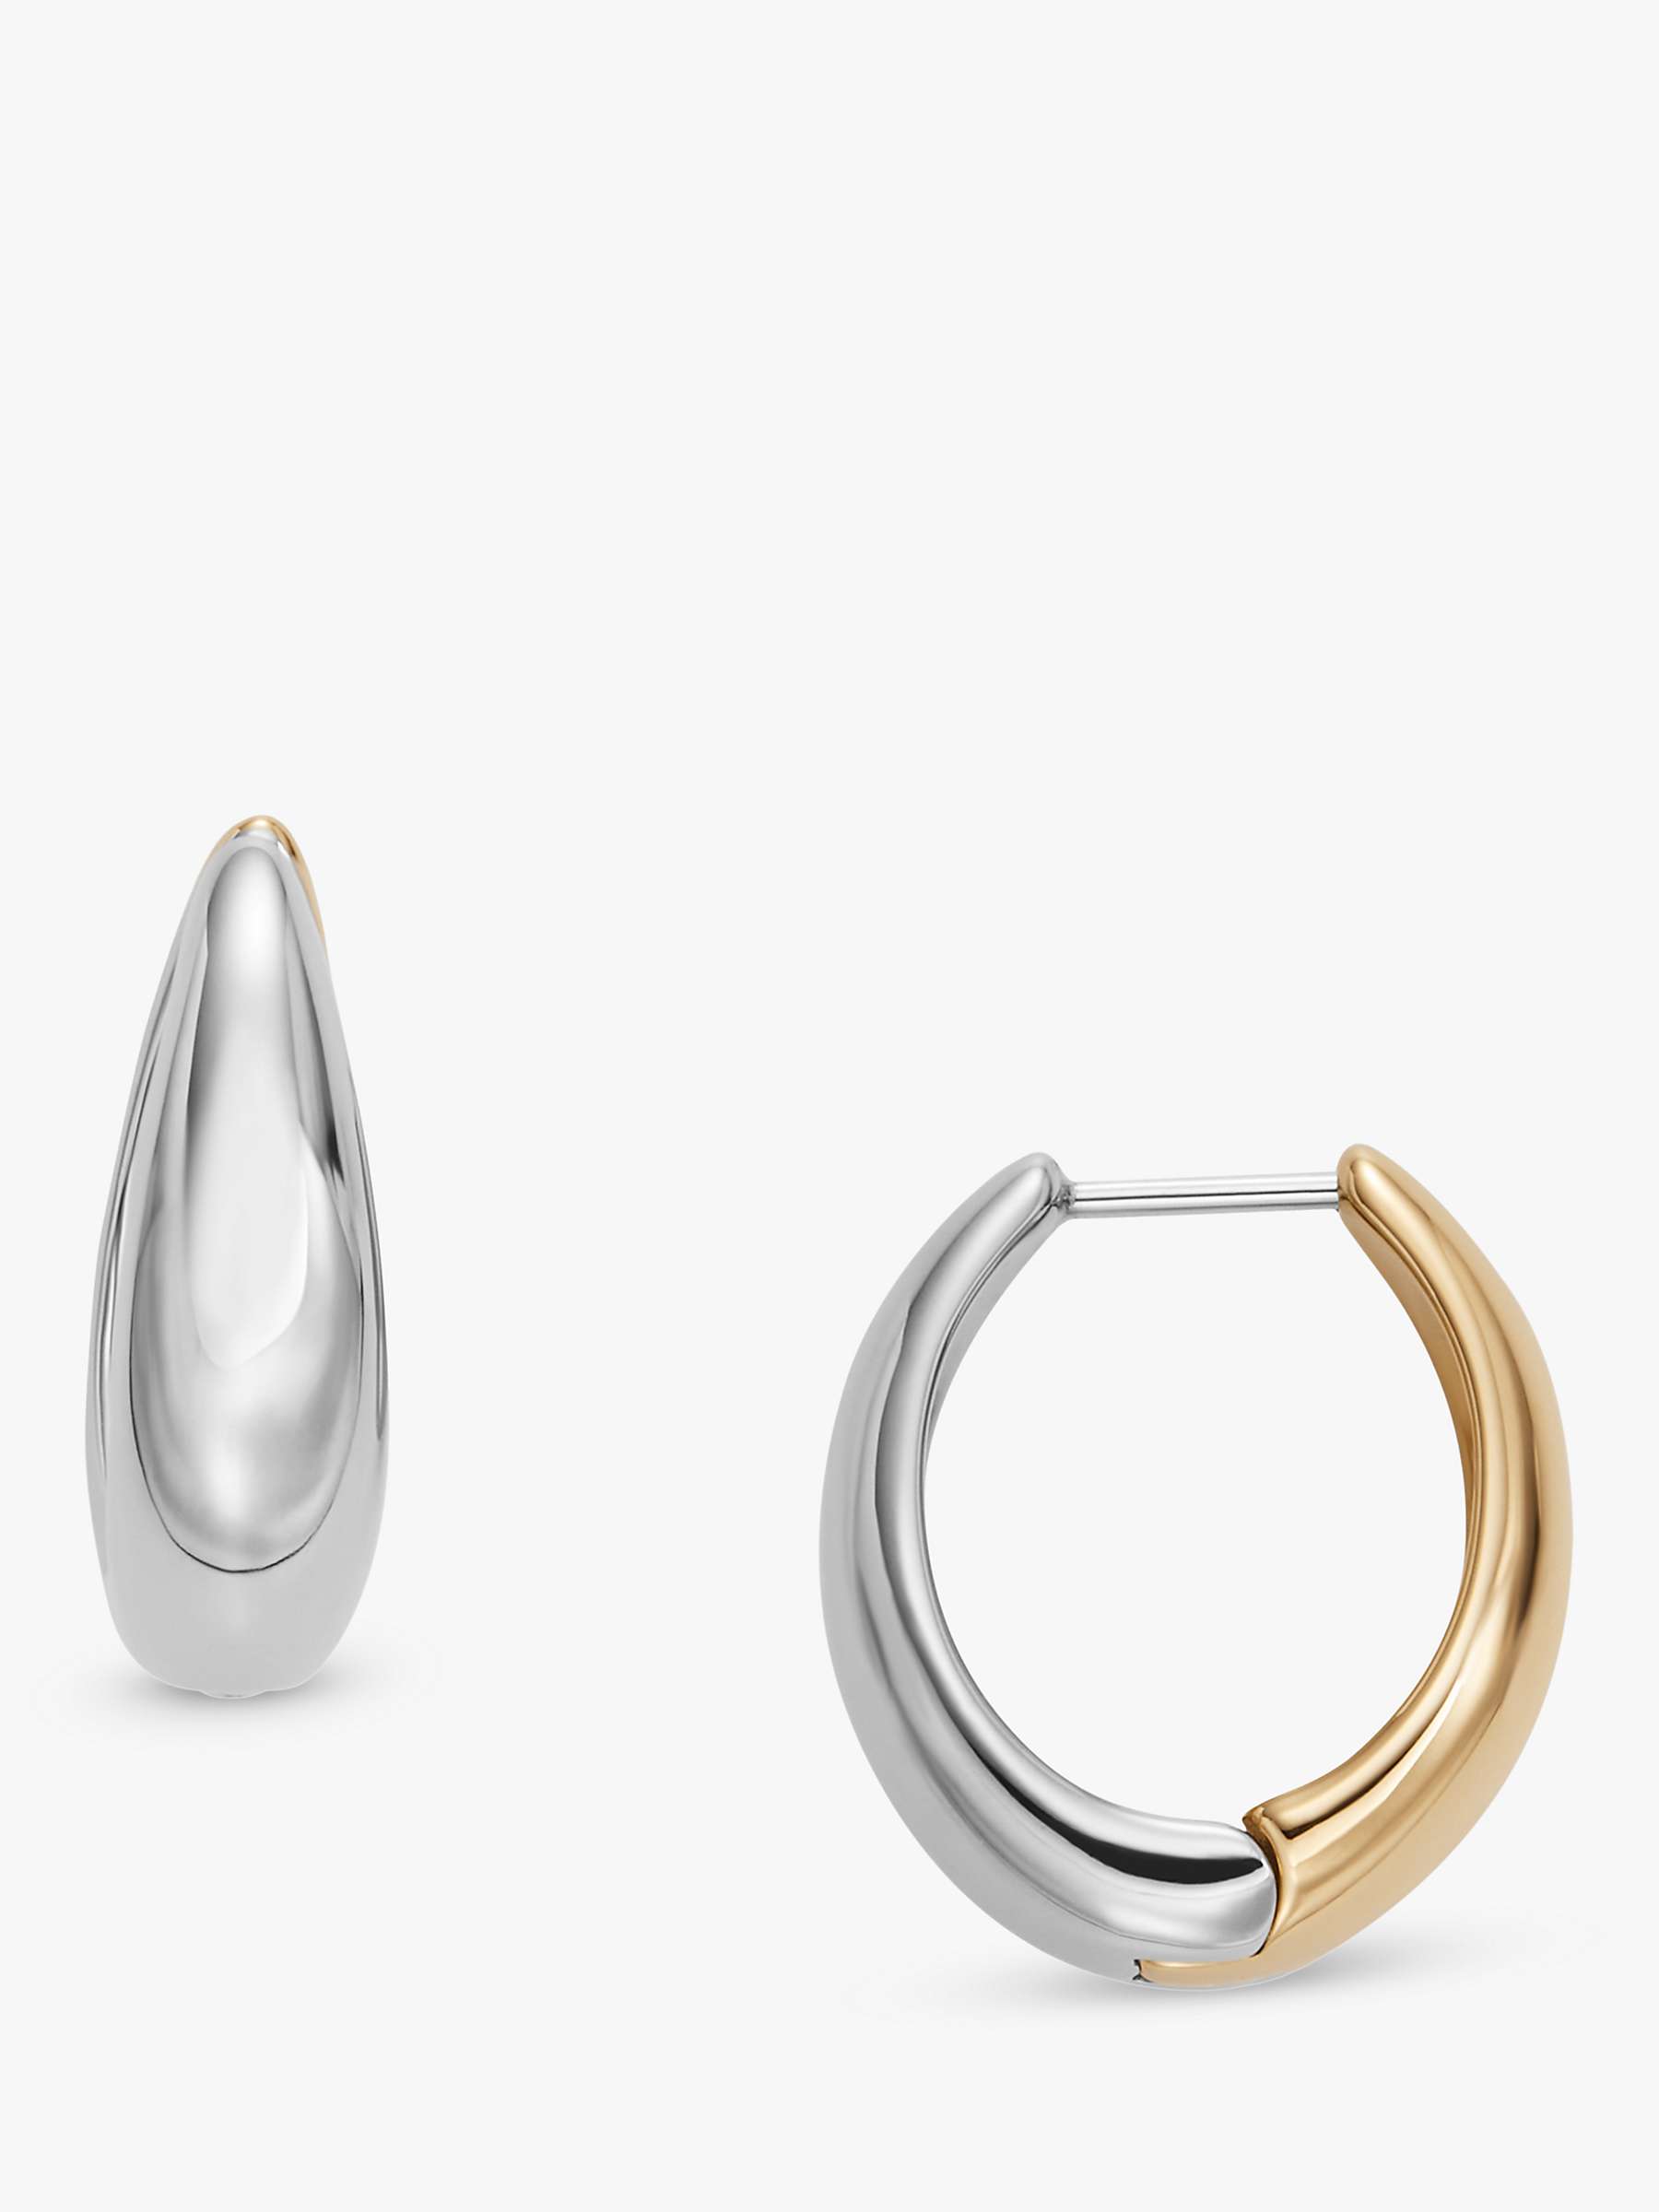 Buy Skagen Linear Hoop Earrings, Gold/Silver Online at johnlewis.com